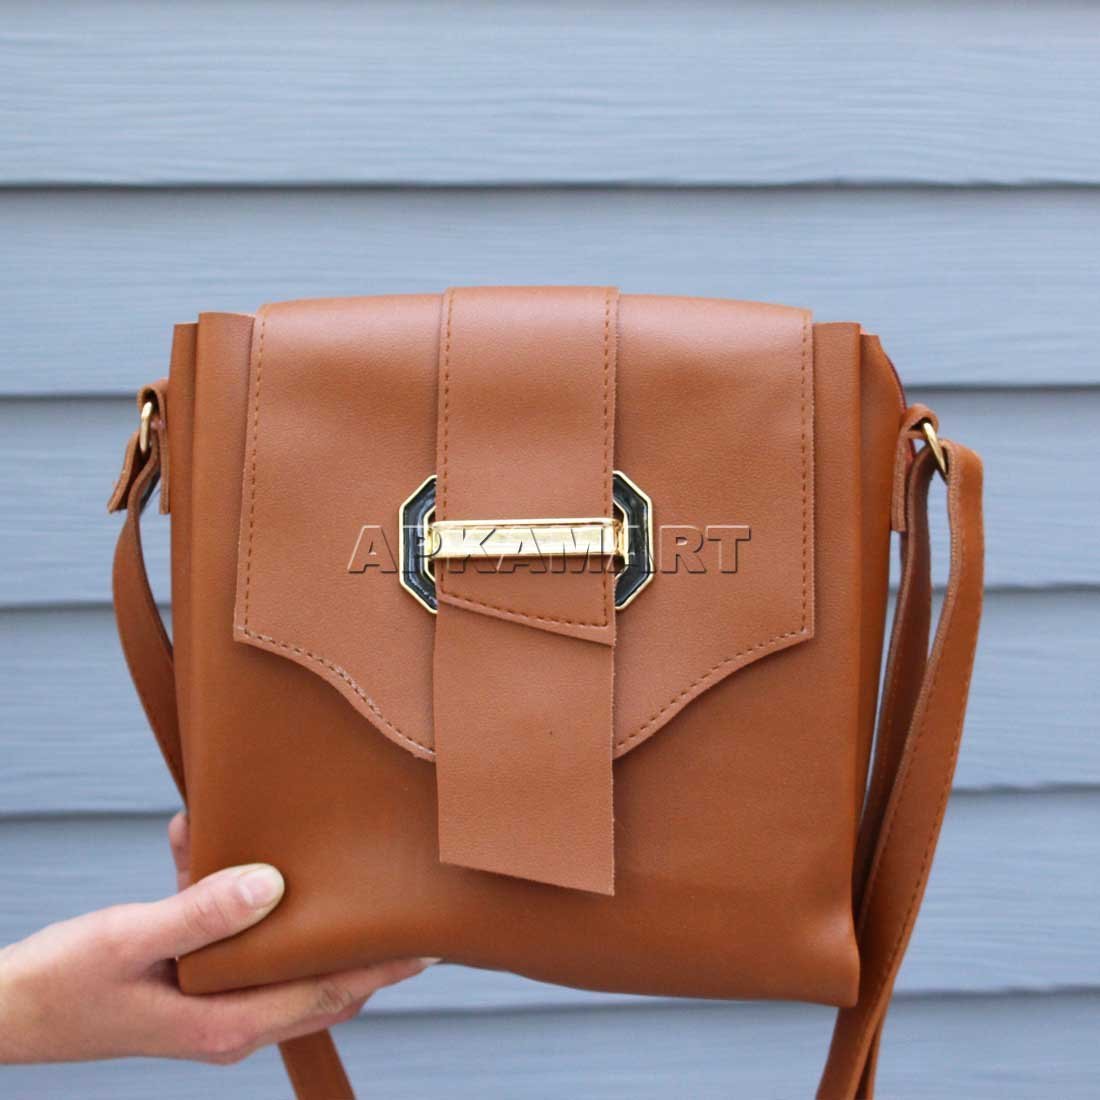 Buy ELEGANCE ERA PU Synthetic Leather Women's Satchel Bag | Ladies Purse  Handbag (DESIGN 1) at Amazon.in